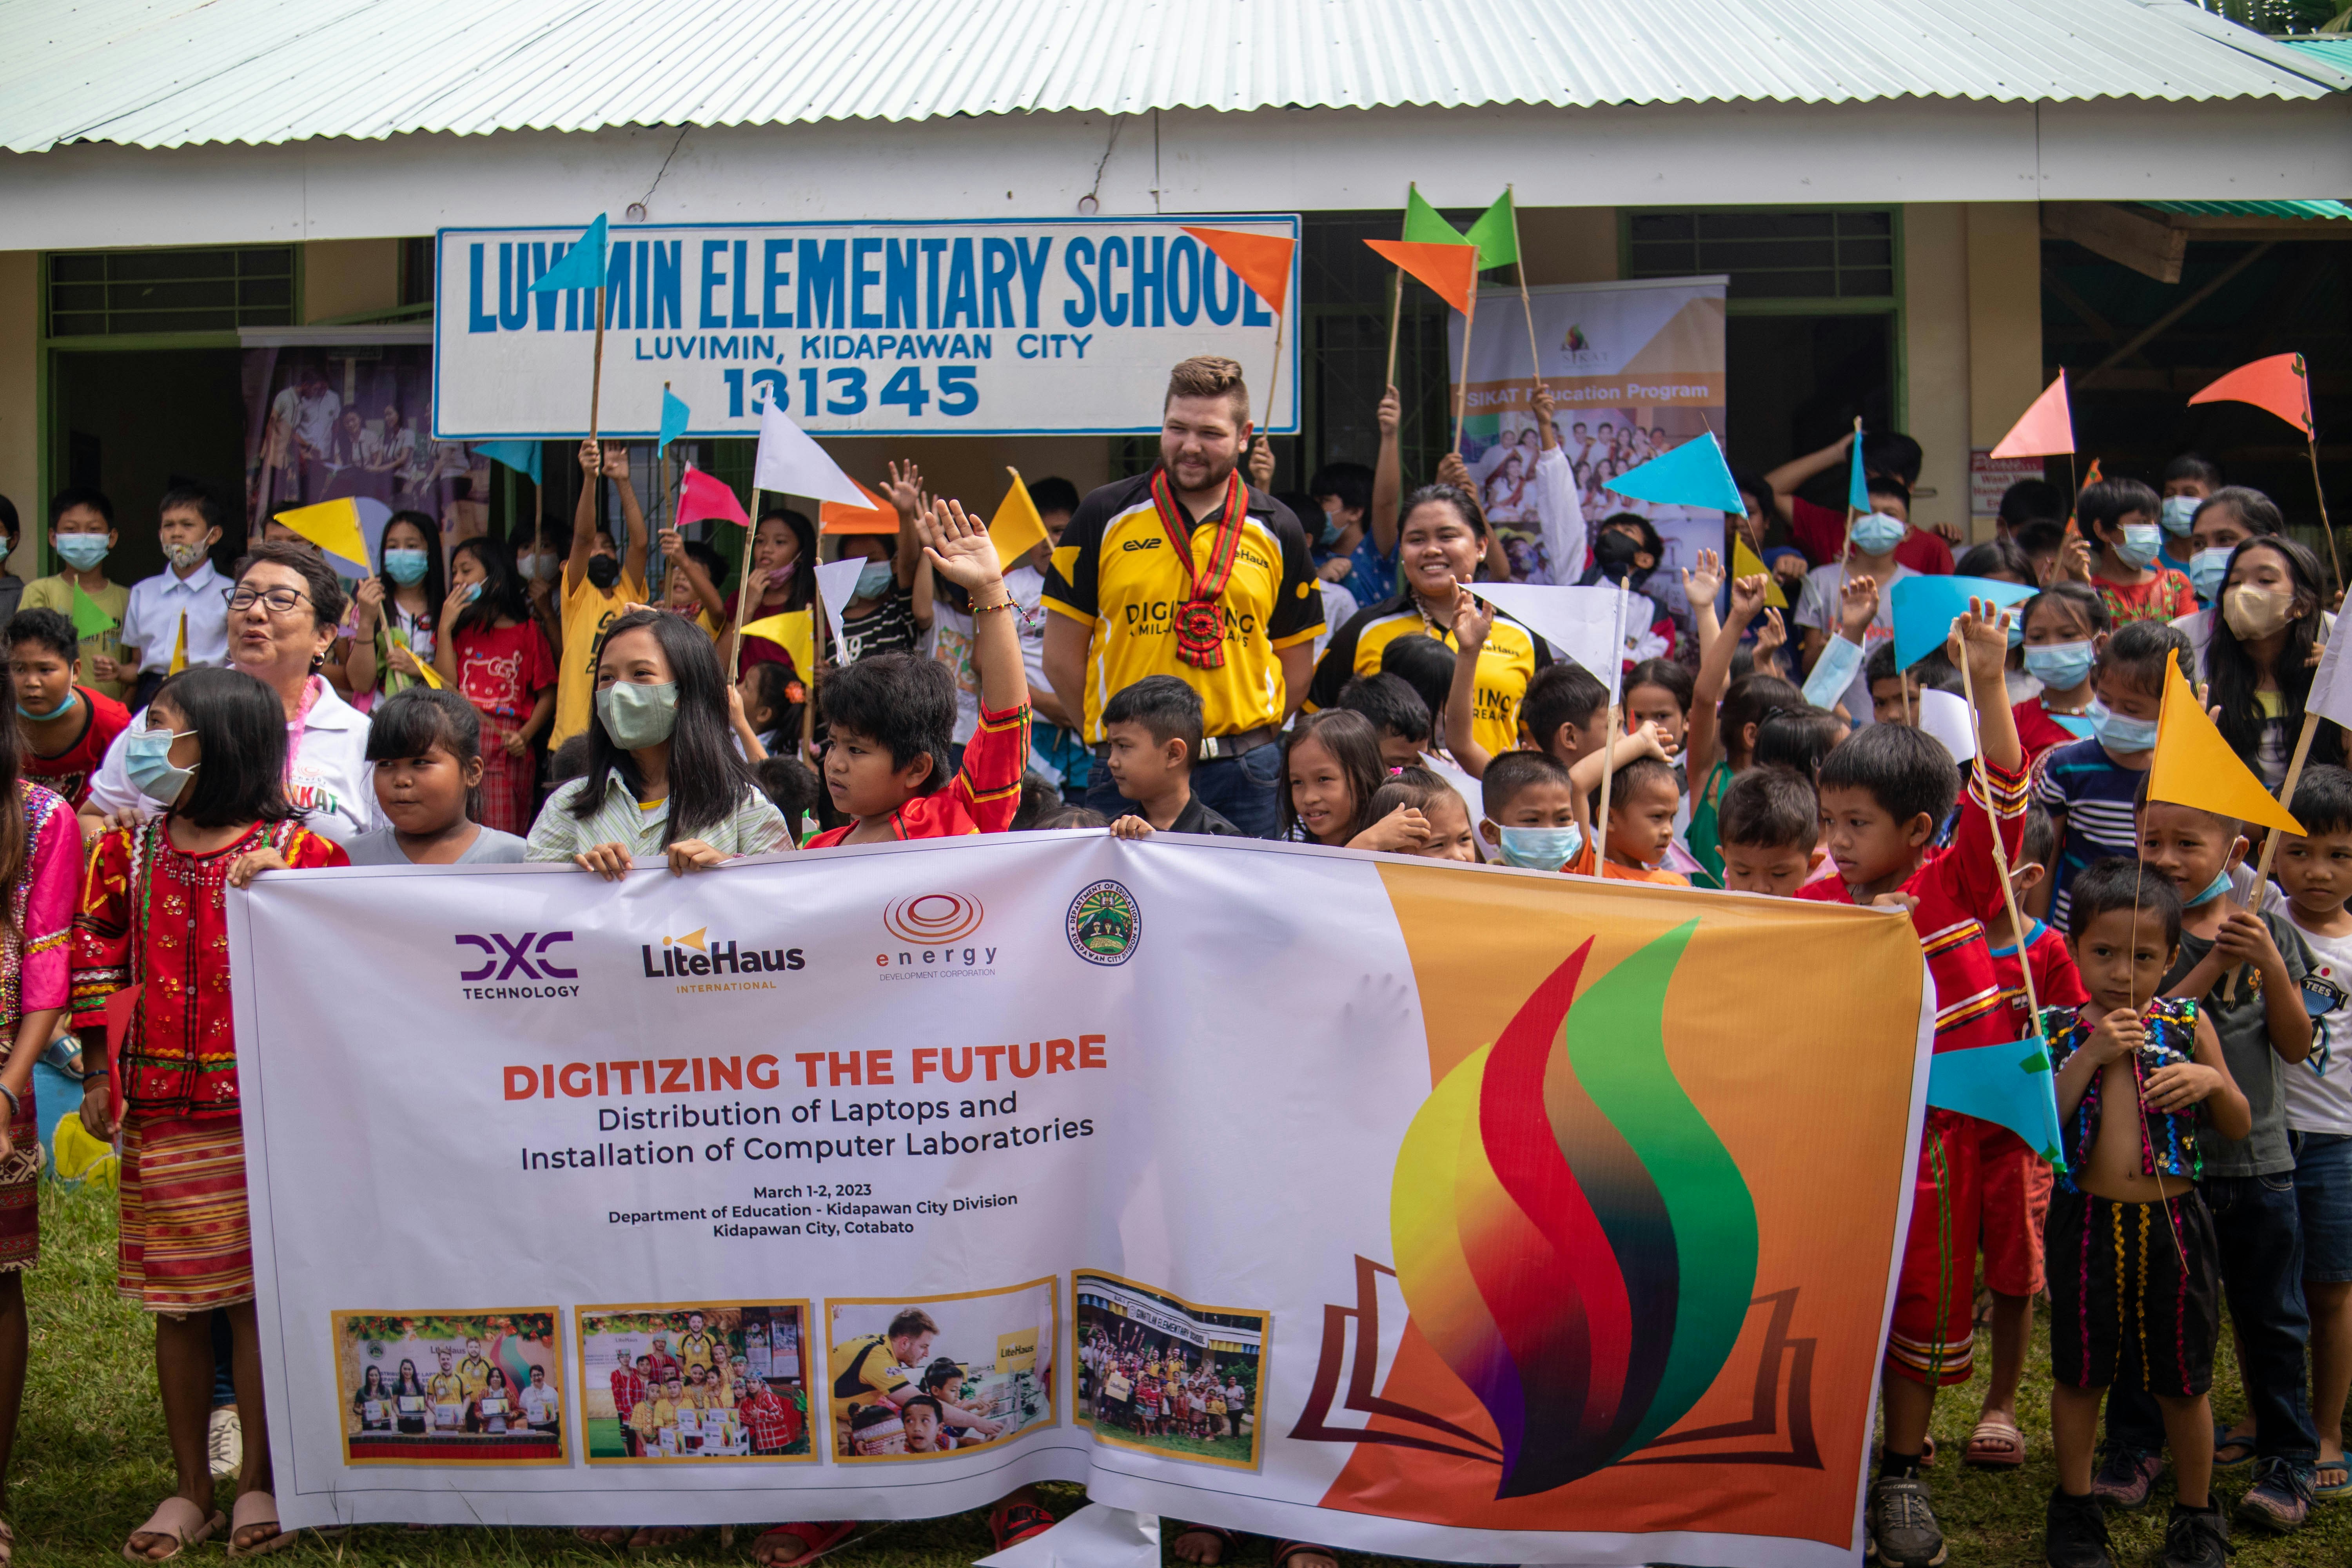 Energy Development Corporation partners with DXC Technology, LiteHaus International to bring digitalisation to Kidapawan schools